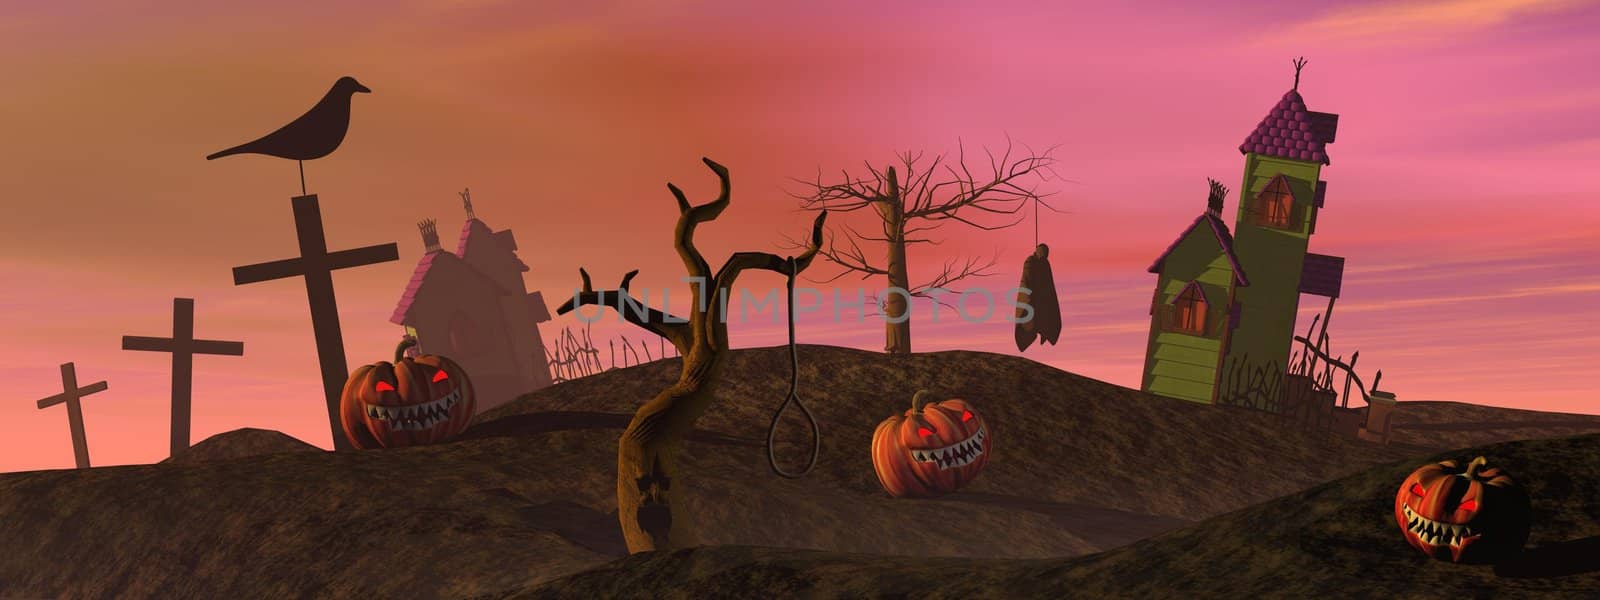 Pink halloween scene by Elenaphotos21